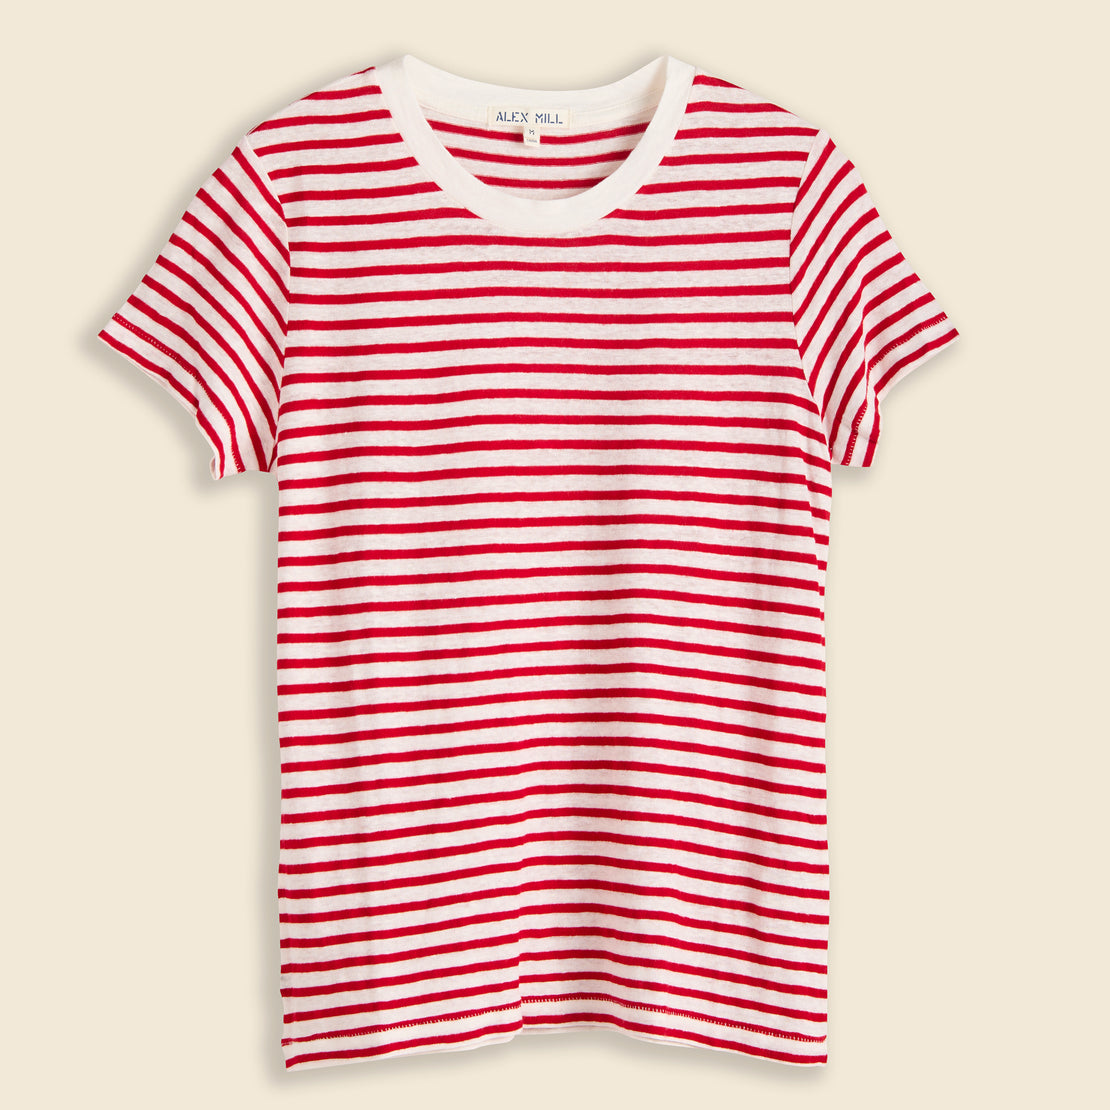 Alex Mill Prospect Linen Tee in Stripe - Red/White Stripe